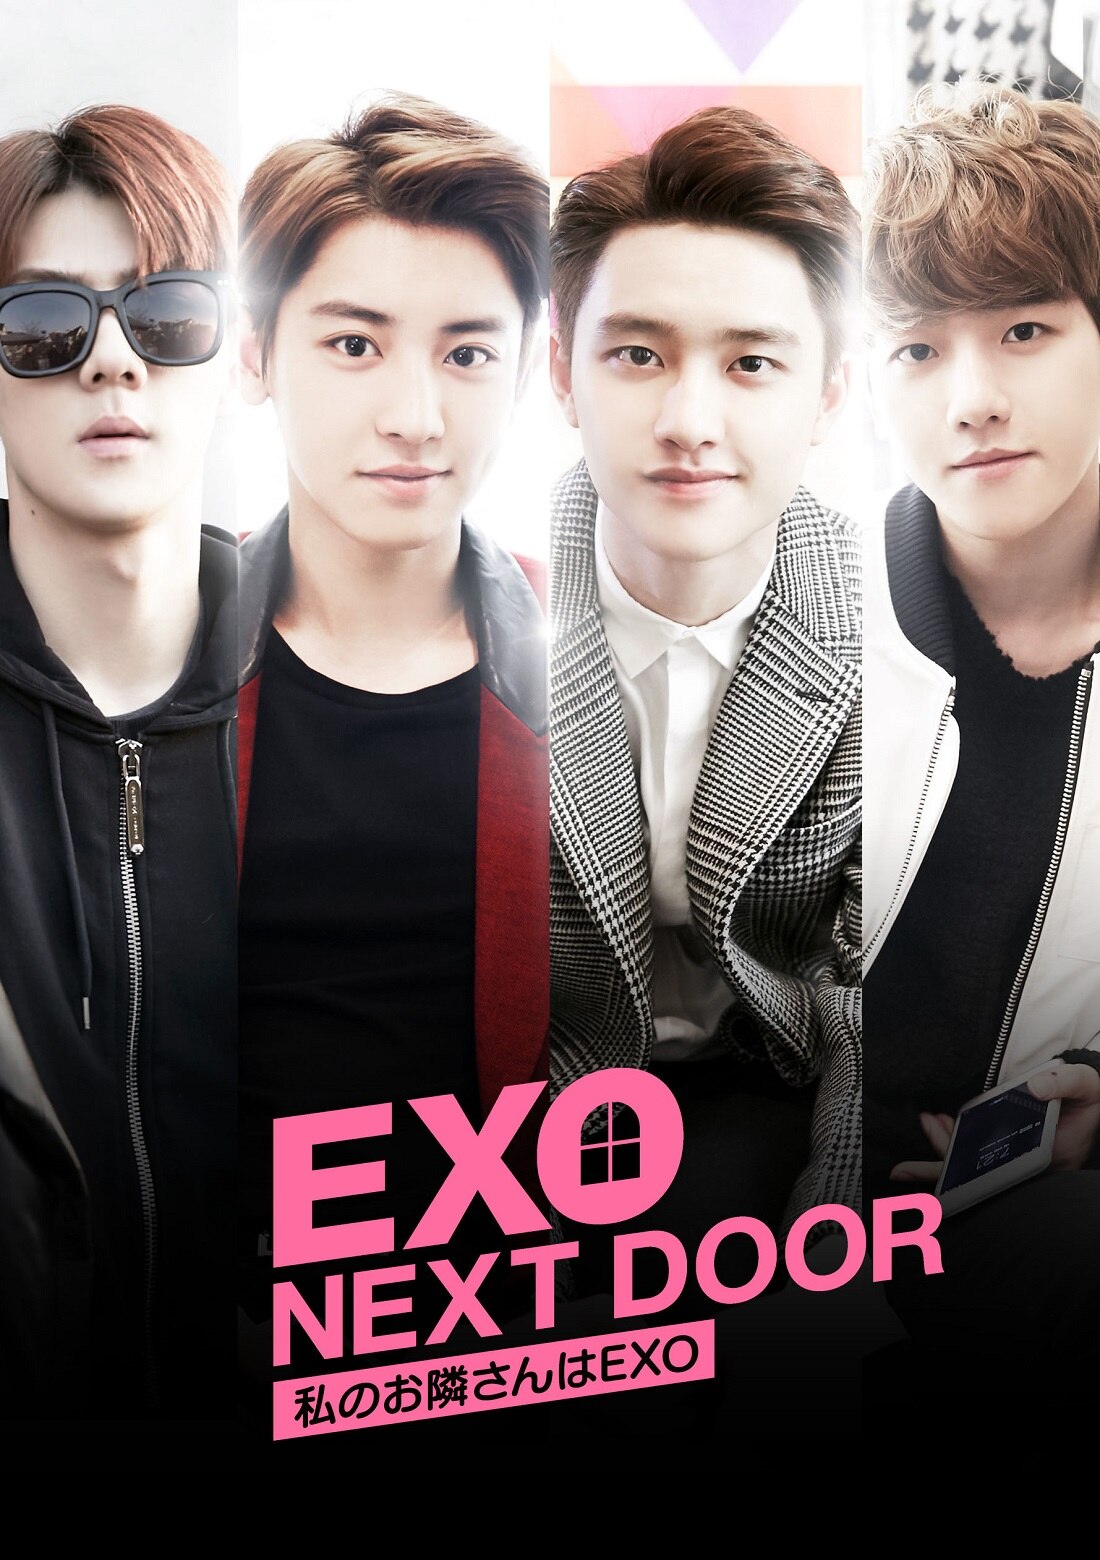 Exo初主演ドラマ Exo Next Door 私のお隣さんはexo のdvdが7 27 水 発売決定